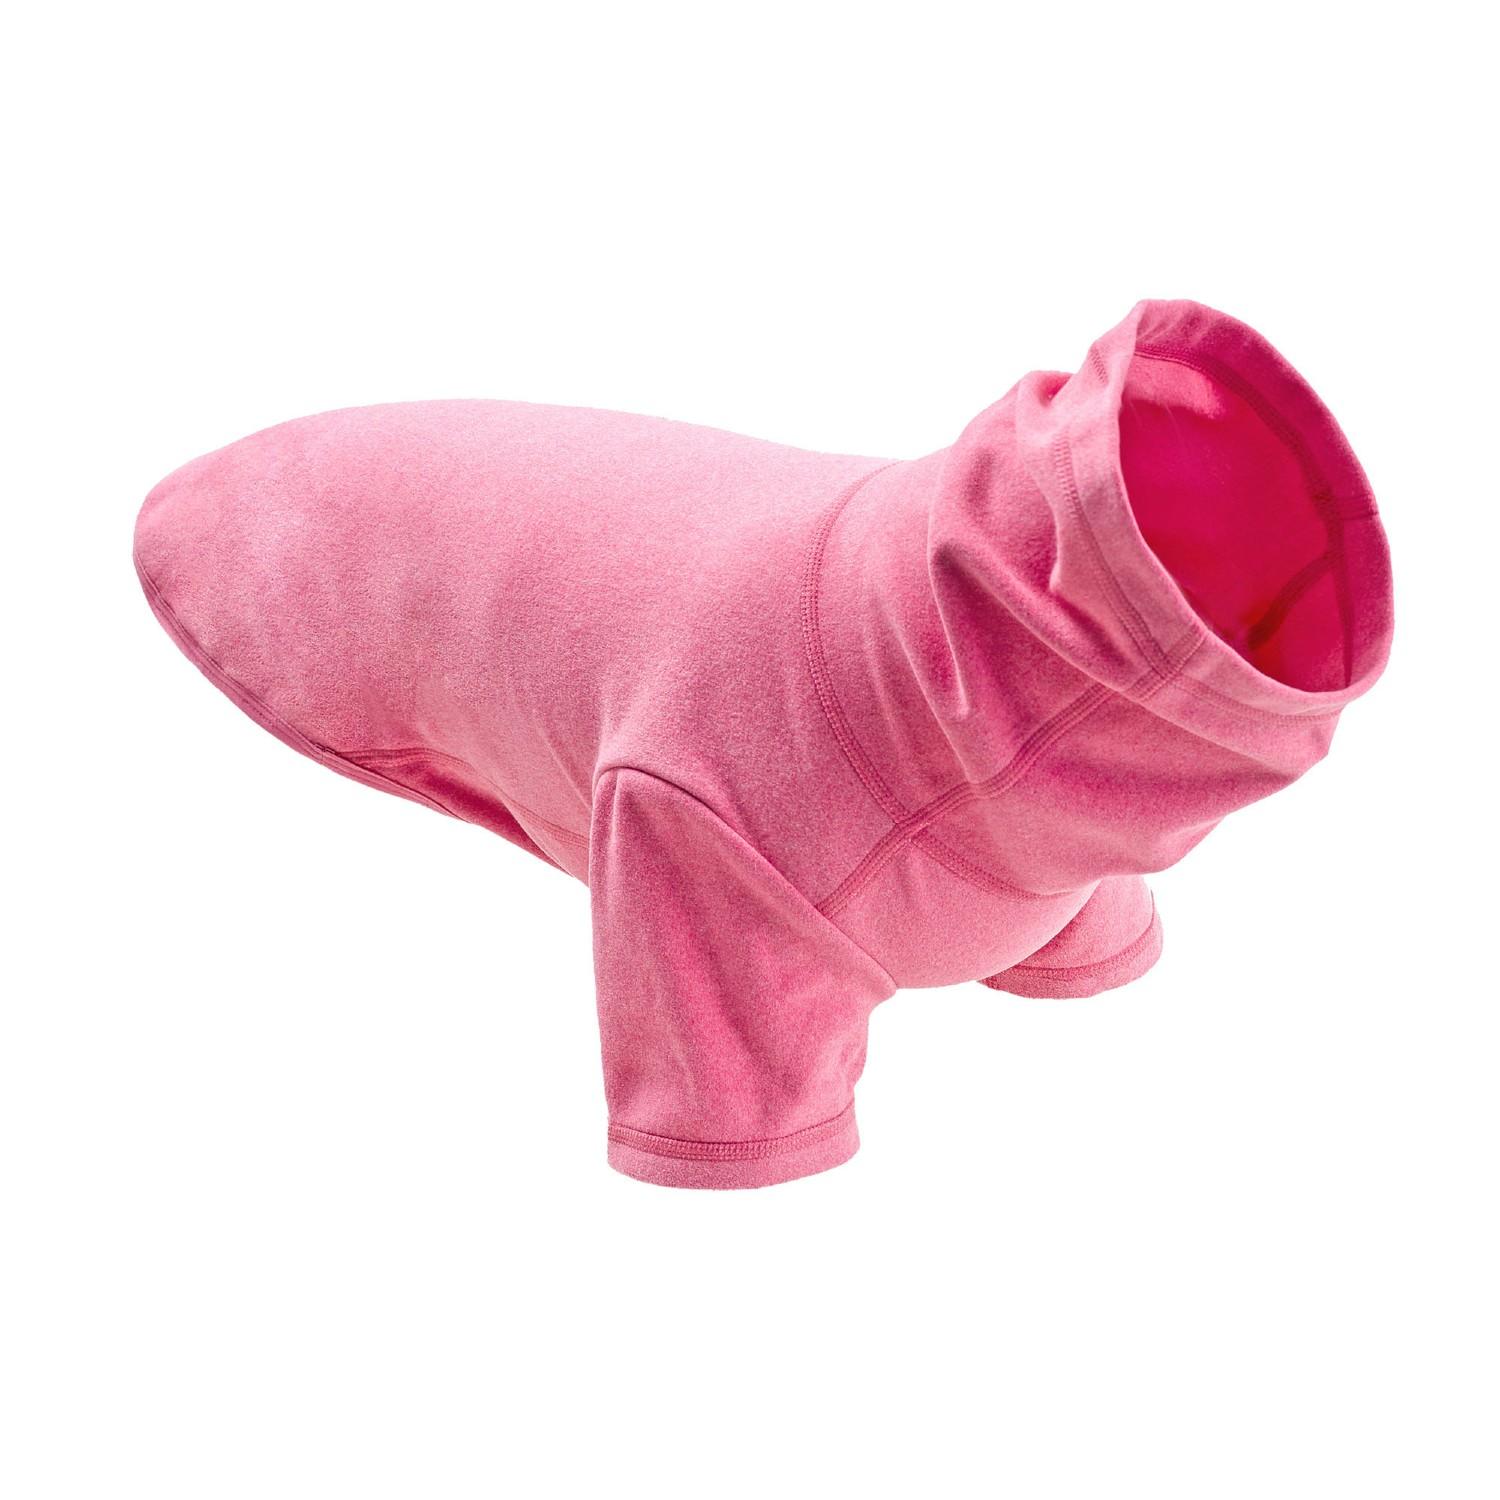 Gooby Turtle Neck Microfiber Stretch Fleece Dog Shirt - Hot Pink